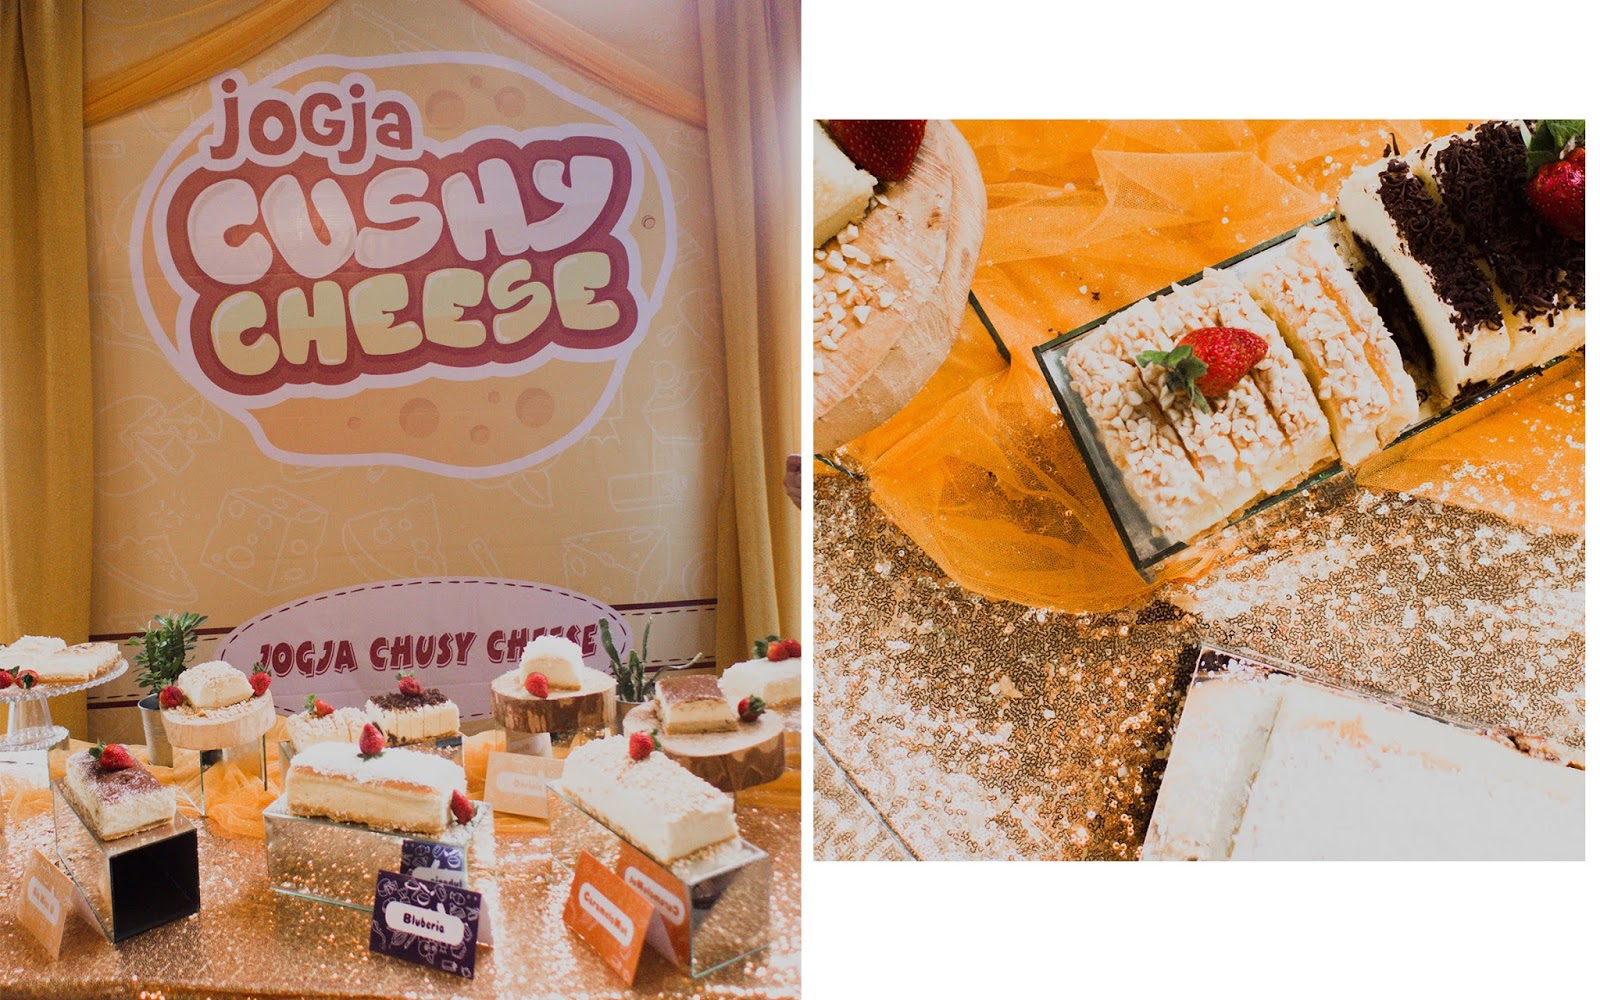 [REVIEW] First Impression: Jogja Cushy Cheese - #itstimetocheese